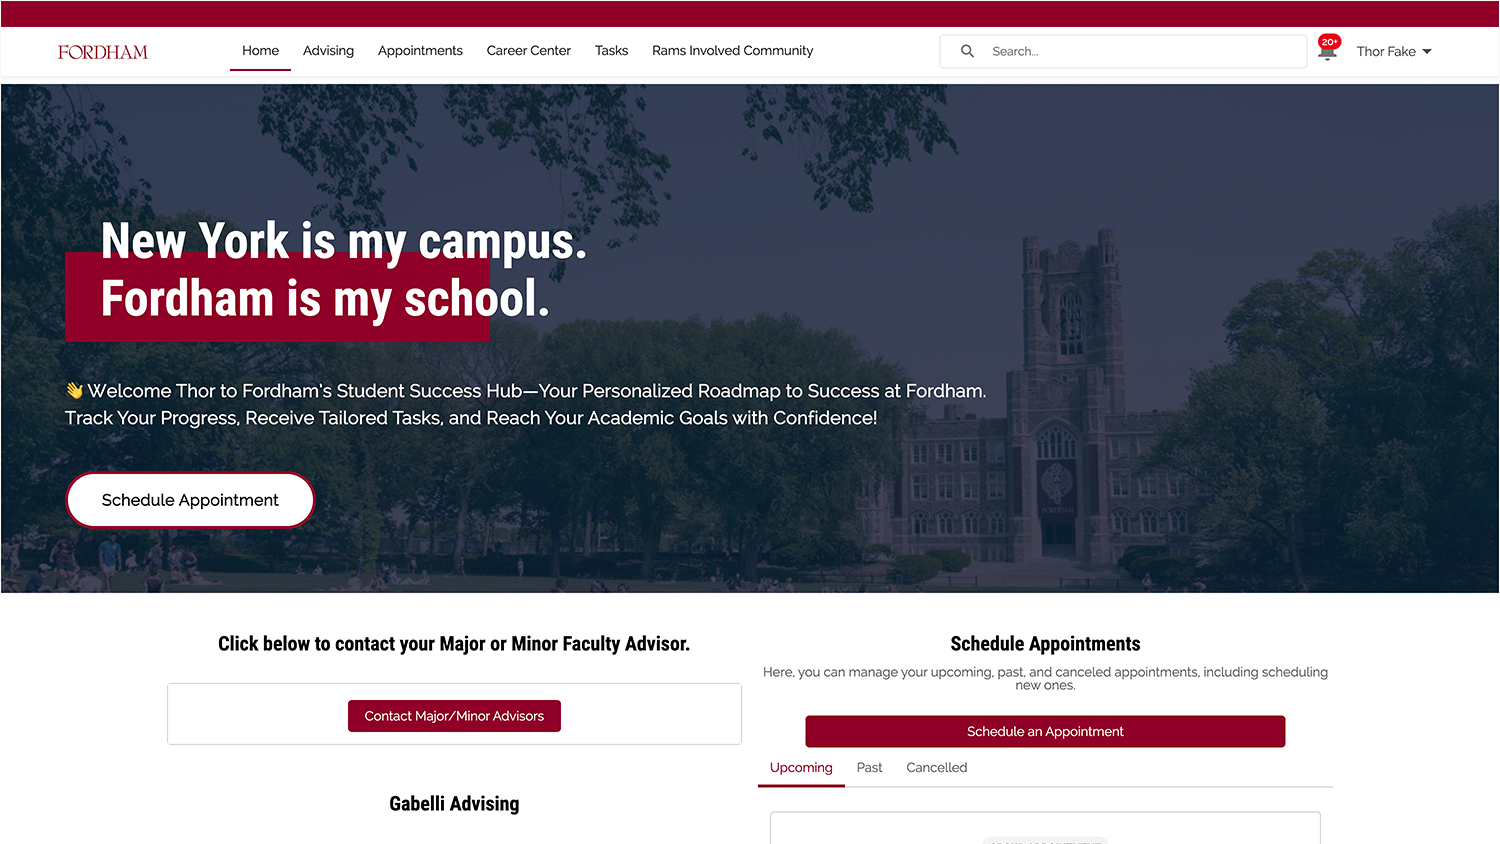 The homepage design of Fordham University's Student Success Hub